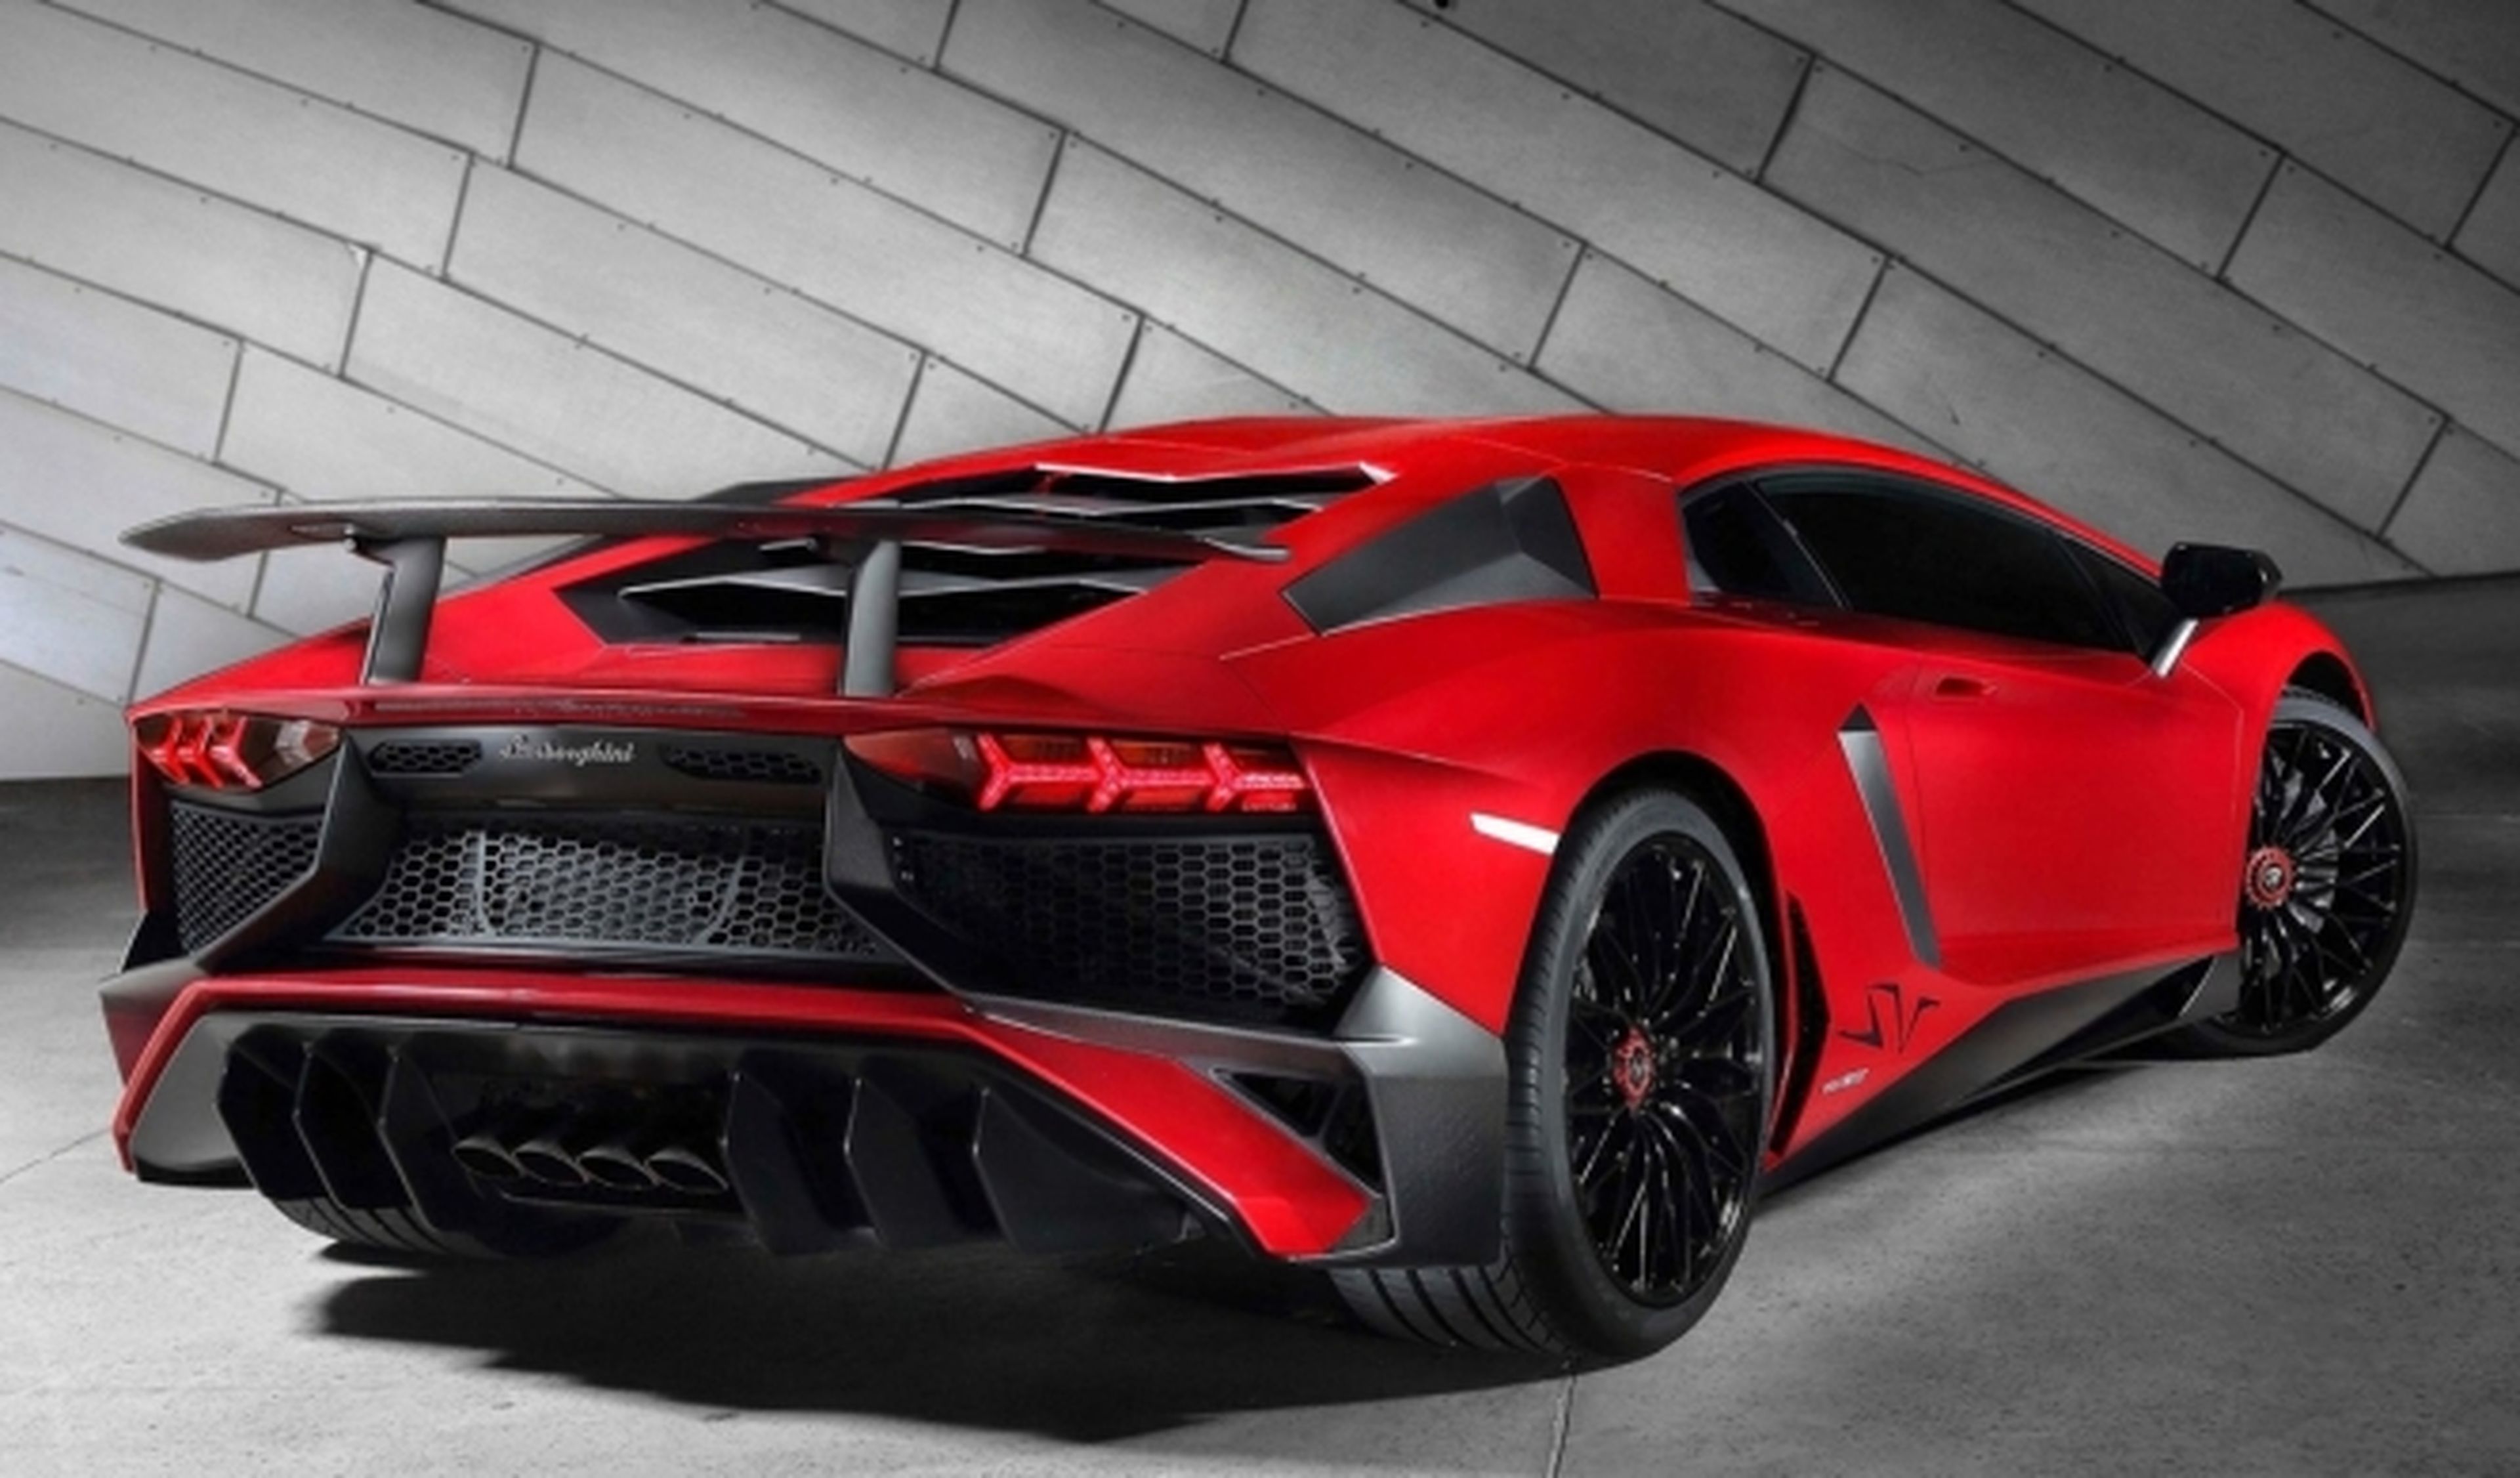 Lamborghini confirma el Aventador SuperVeloce Roadster